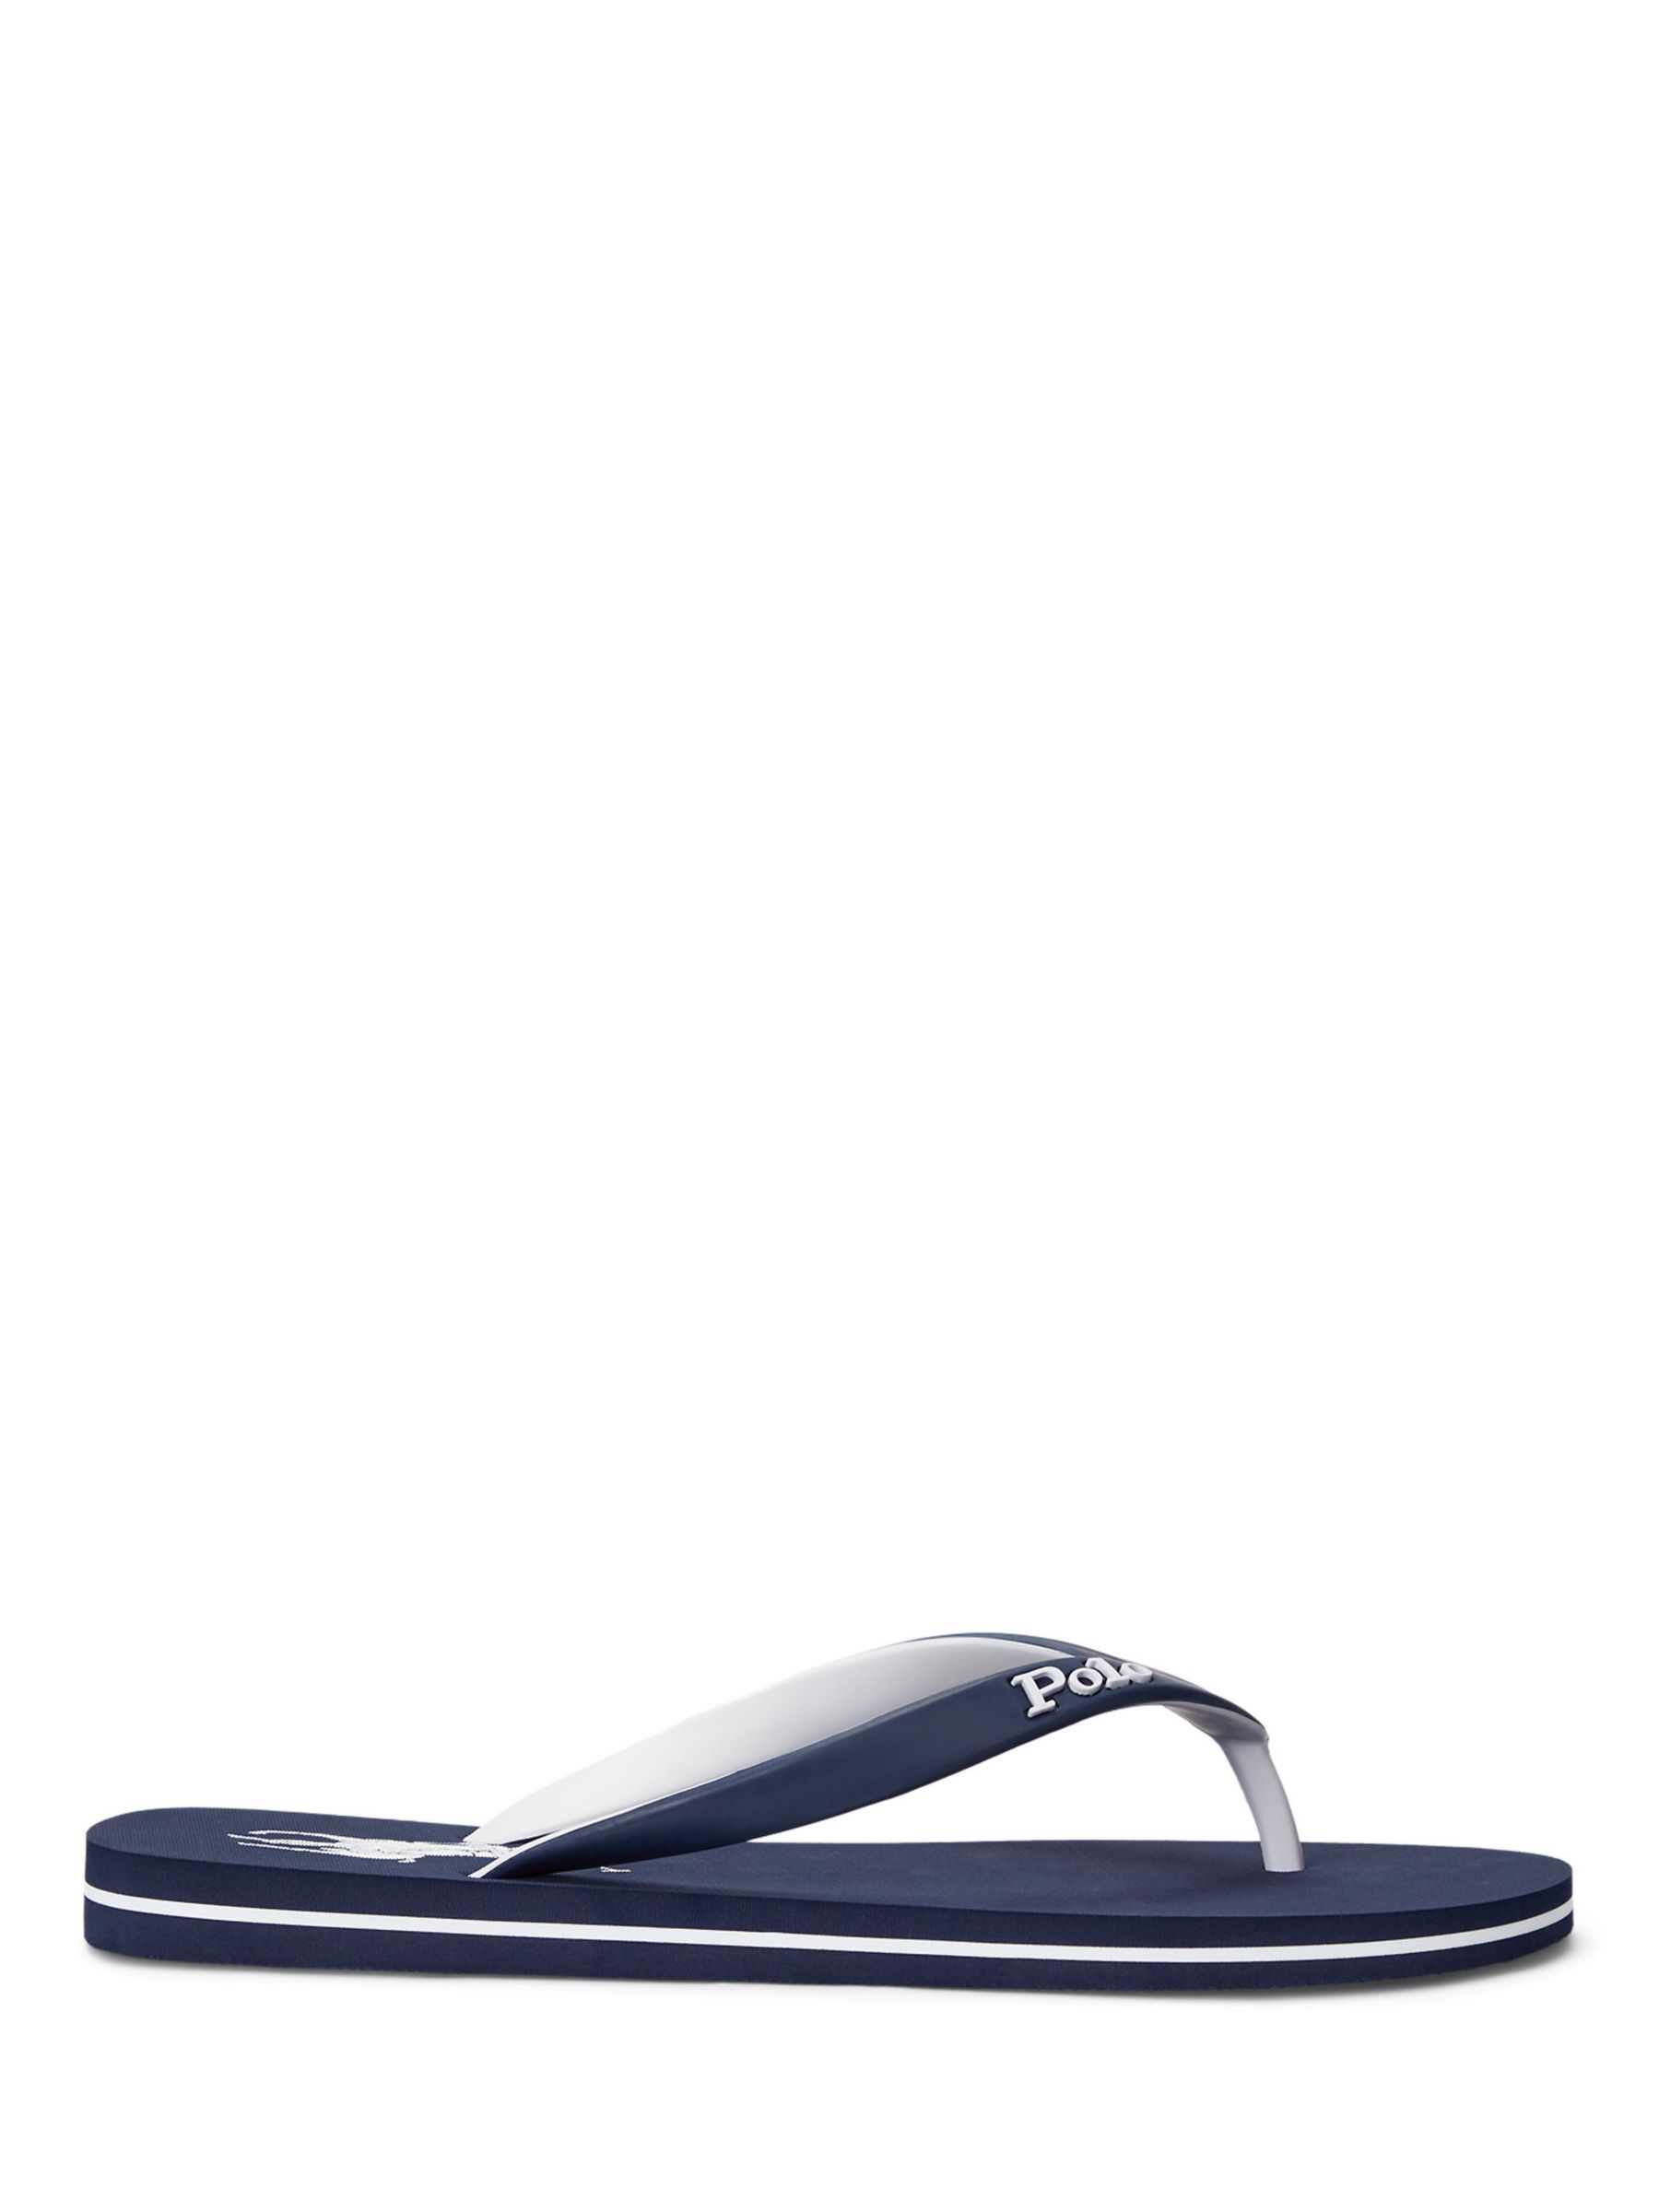 Buy Ralph Lauren Rubber Sandals, Navy/White Online at johnlewis.com